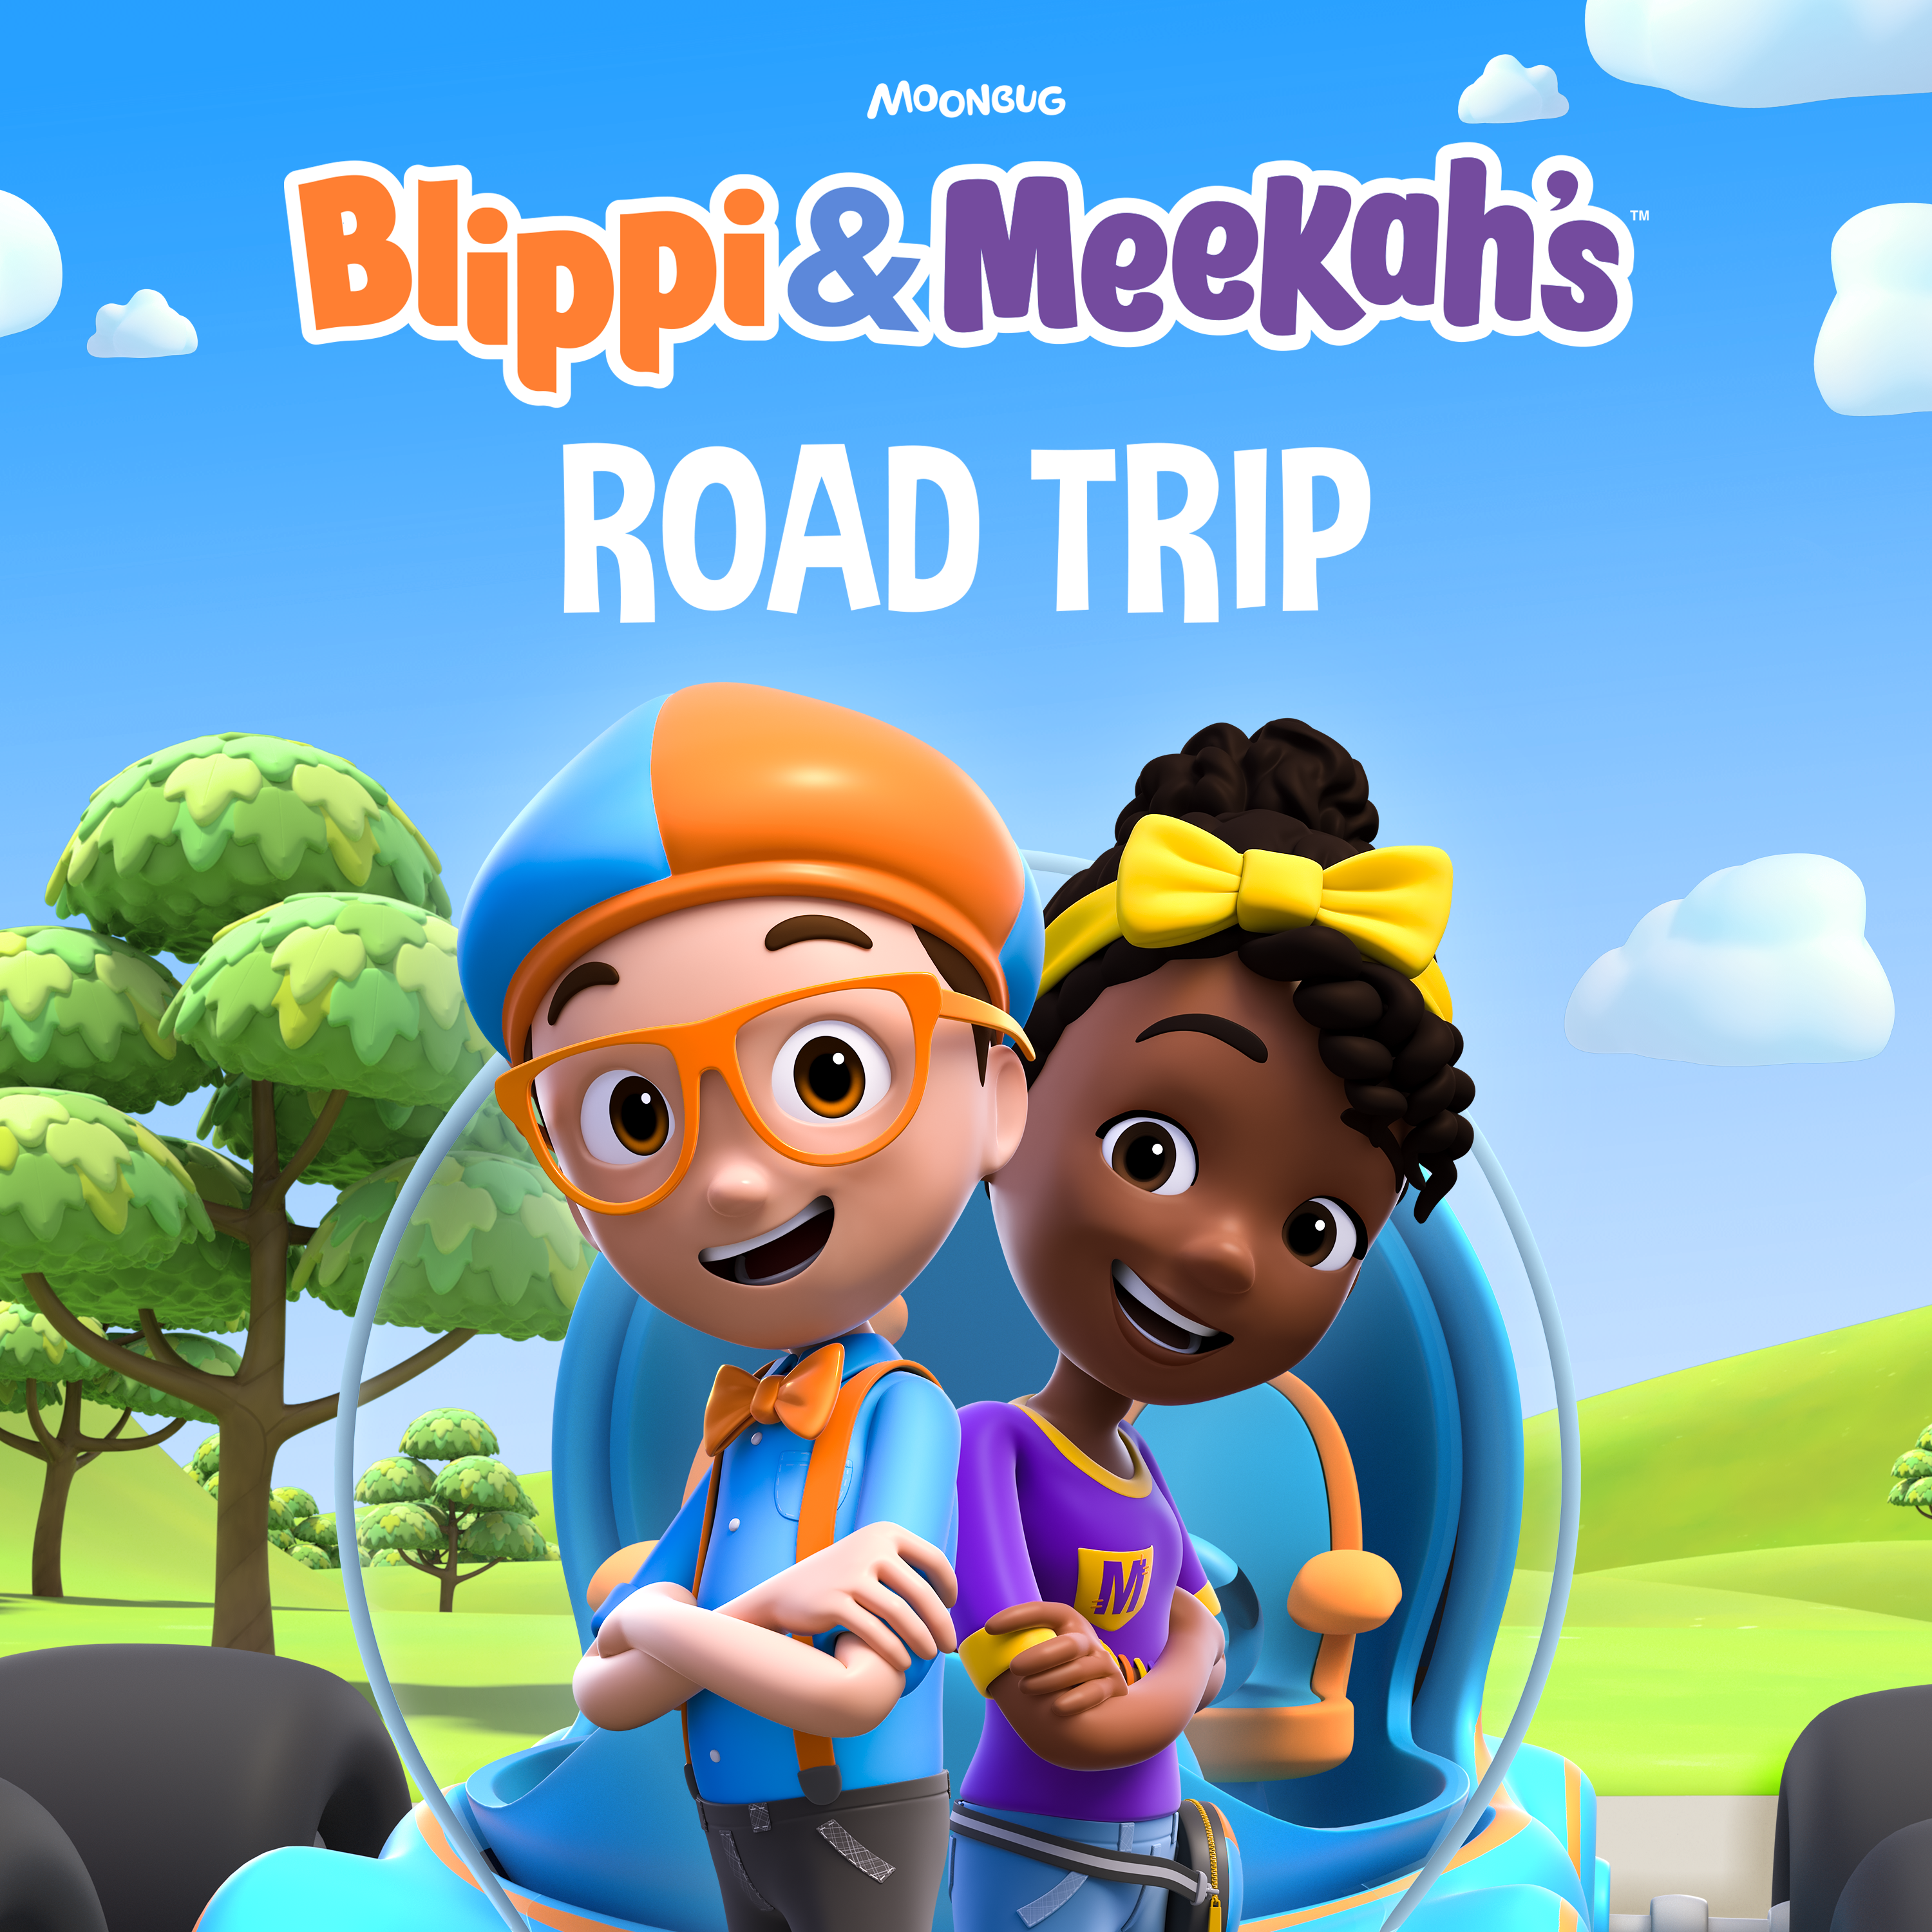 Introducing: Blippi & Meekah’s Road Trip